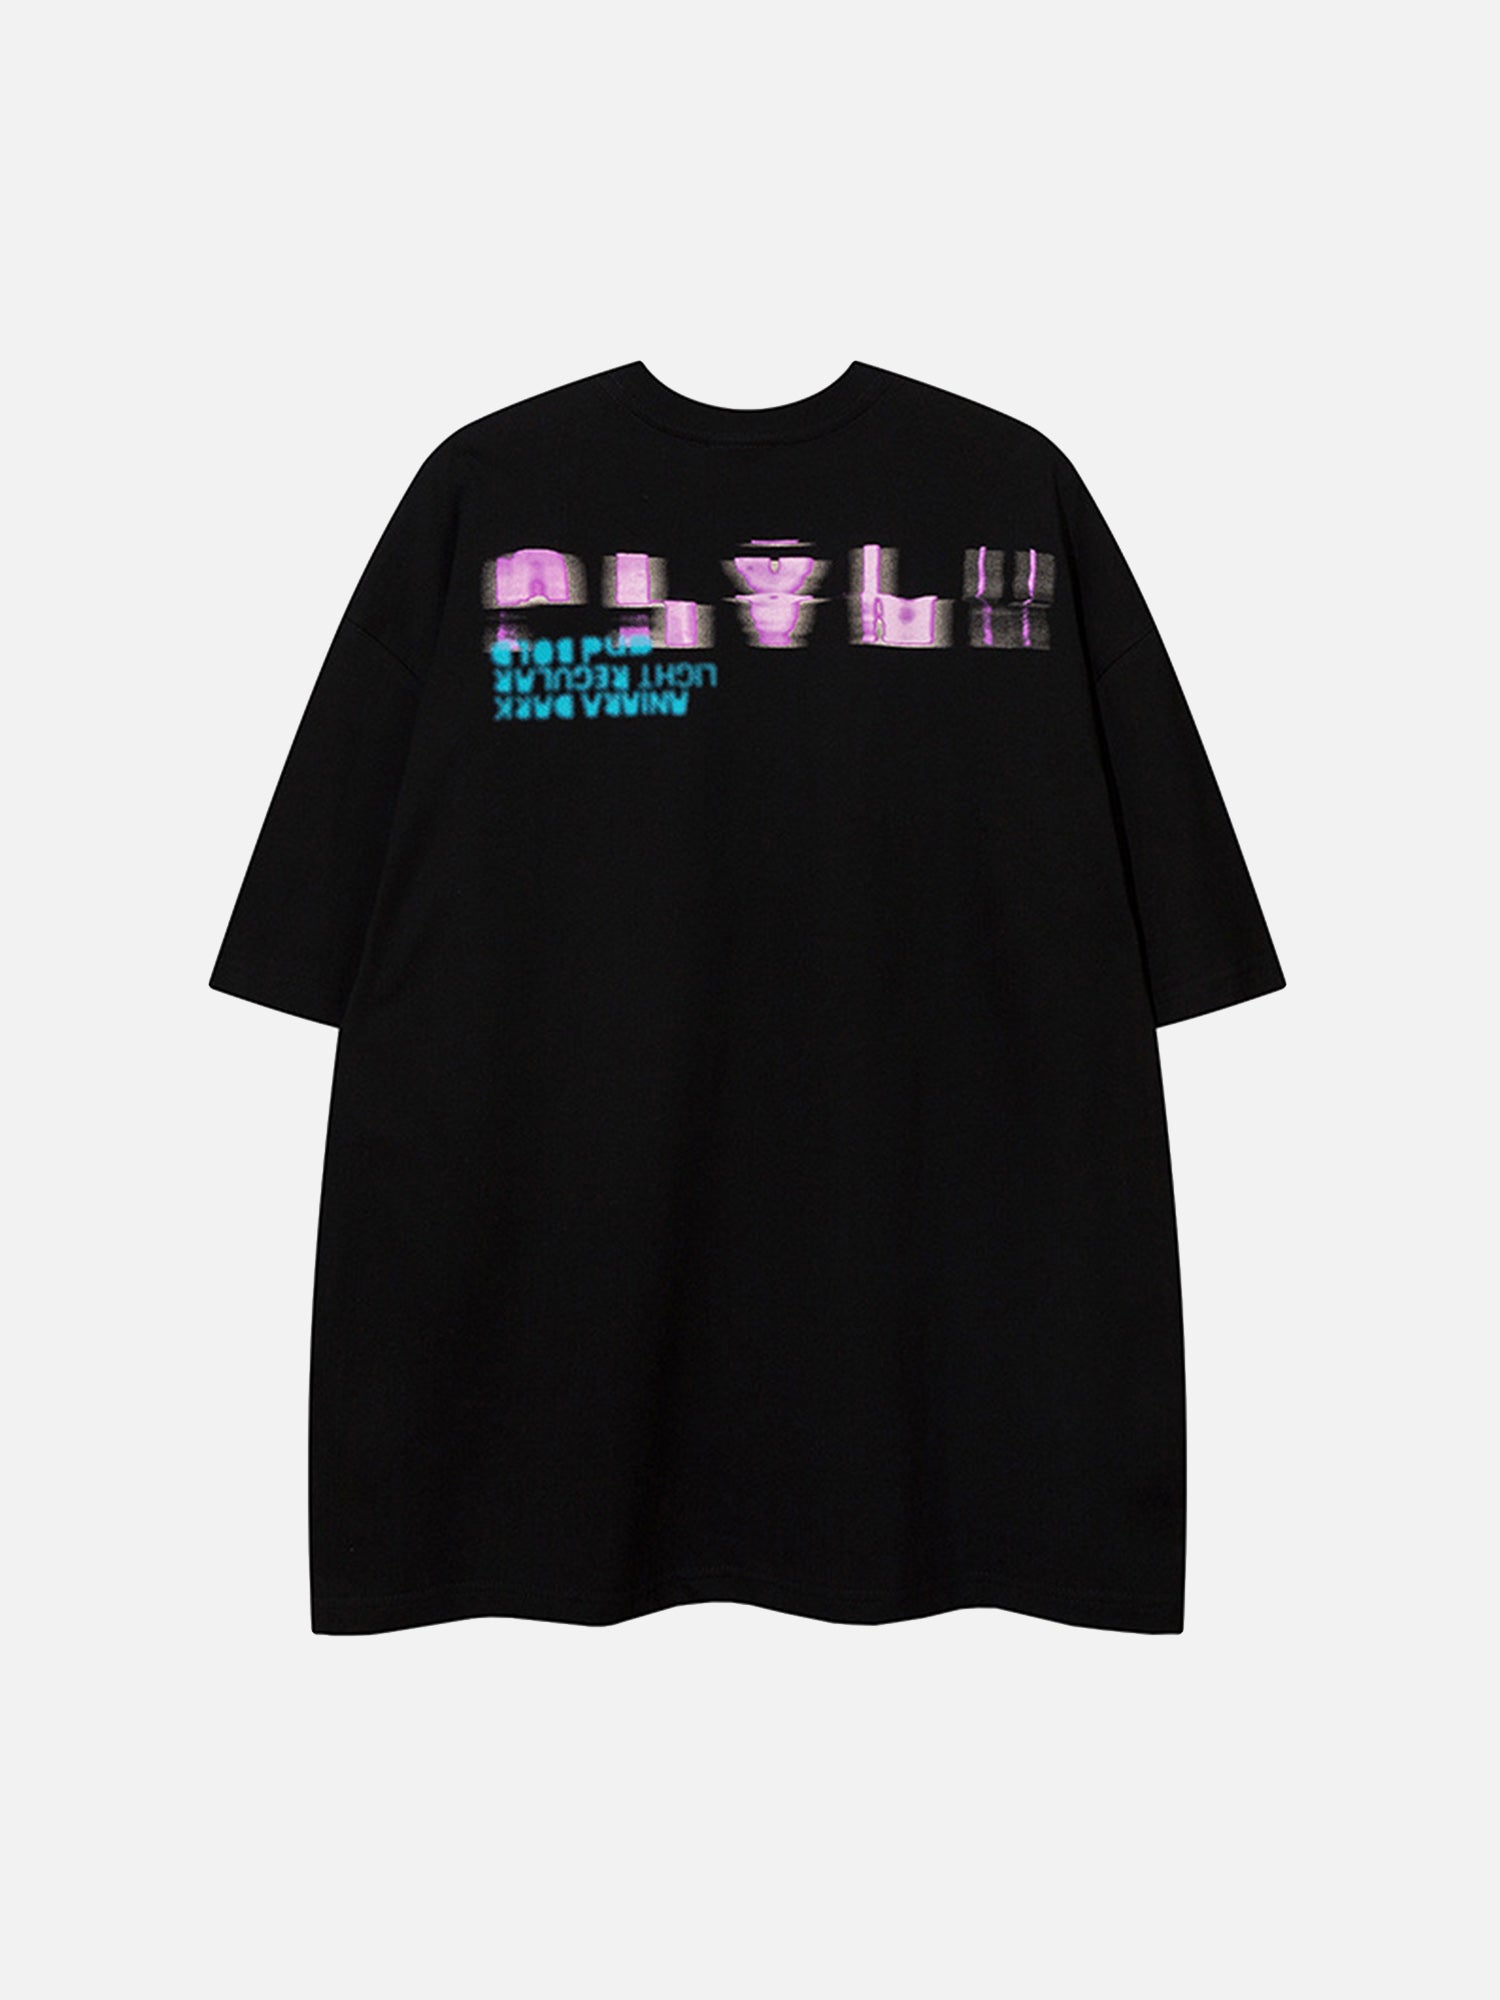 Retro Hip Hop Thermal Imaging Character T-shirt